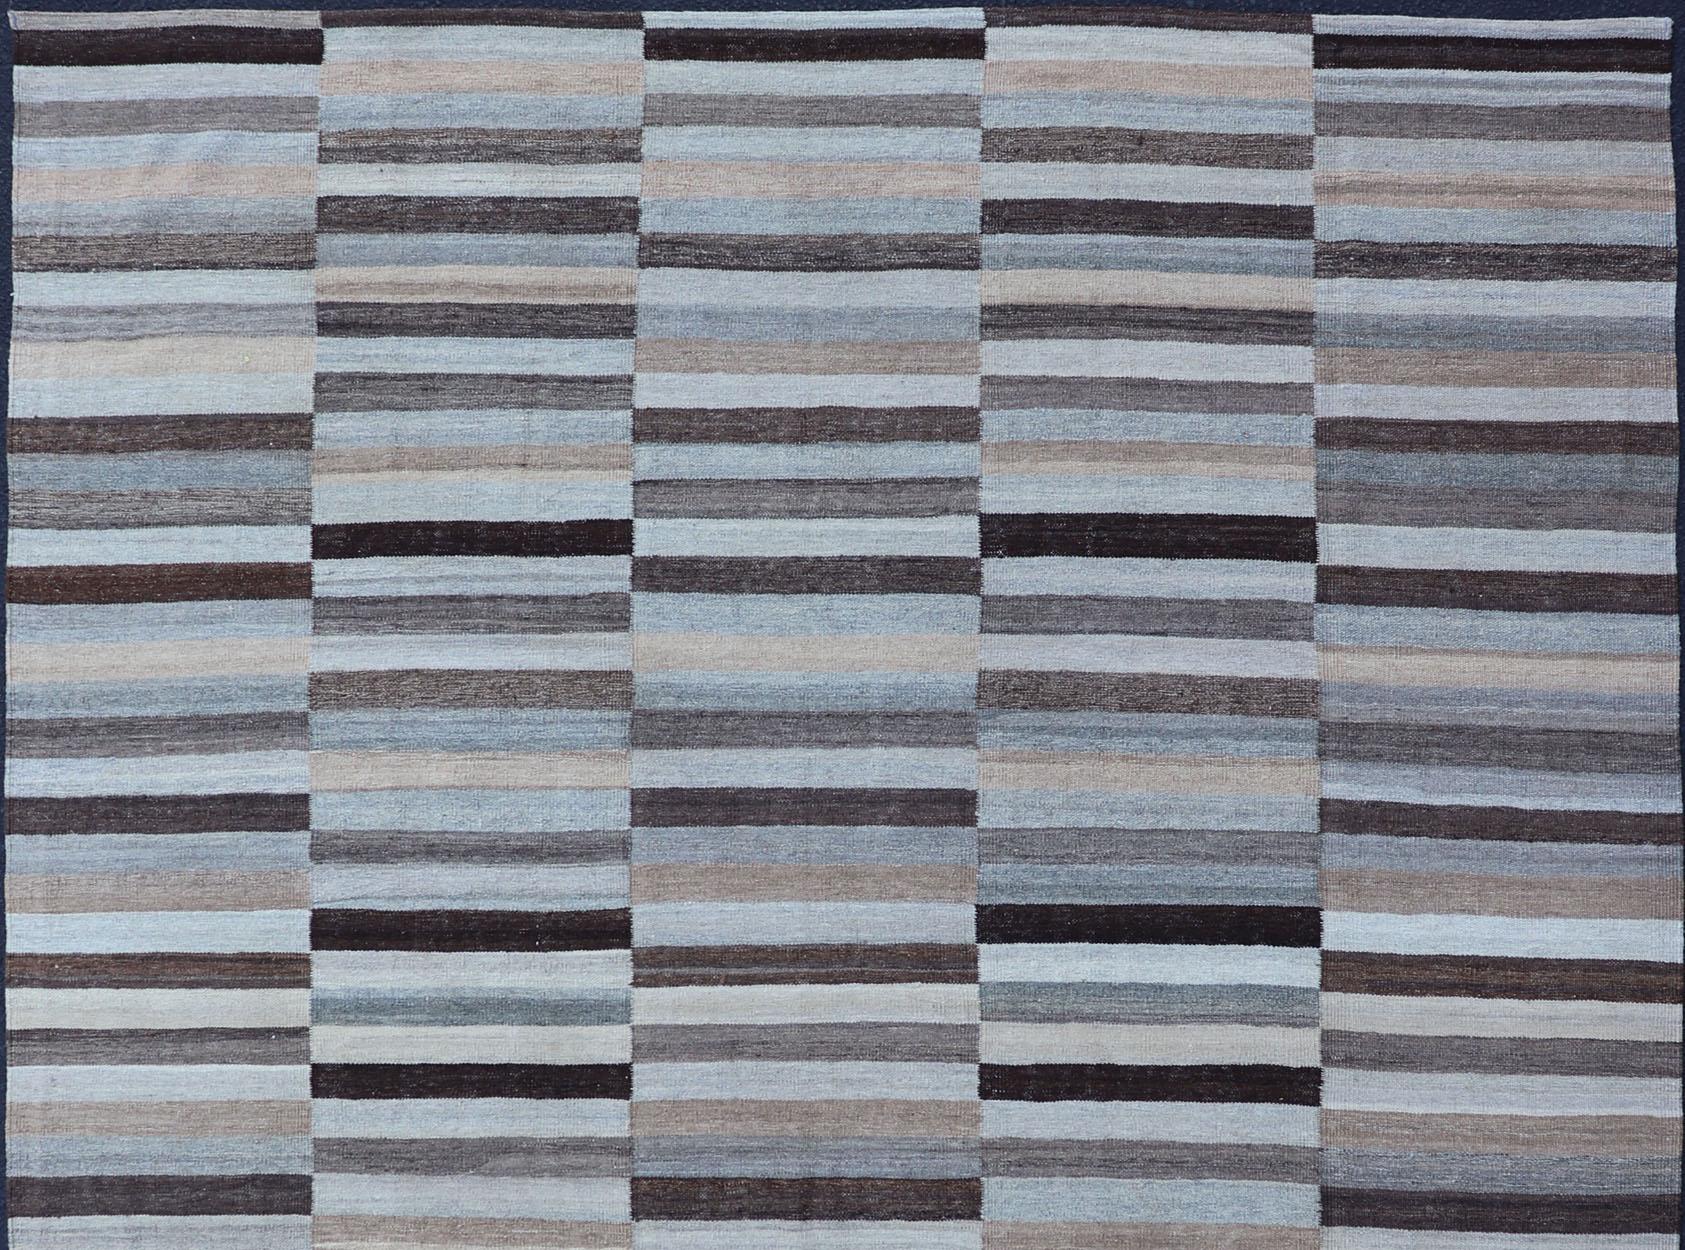 Afghan Modern Flat-Weave Kilim Rug in Multi-Panel Striped Design in Earthy Tones For Sale